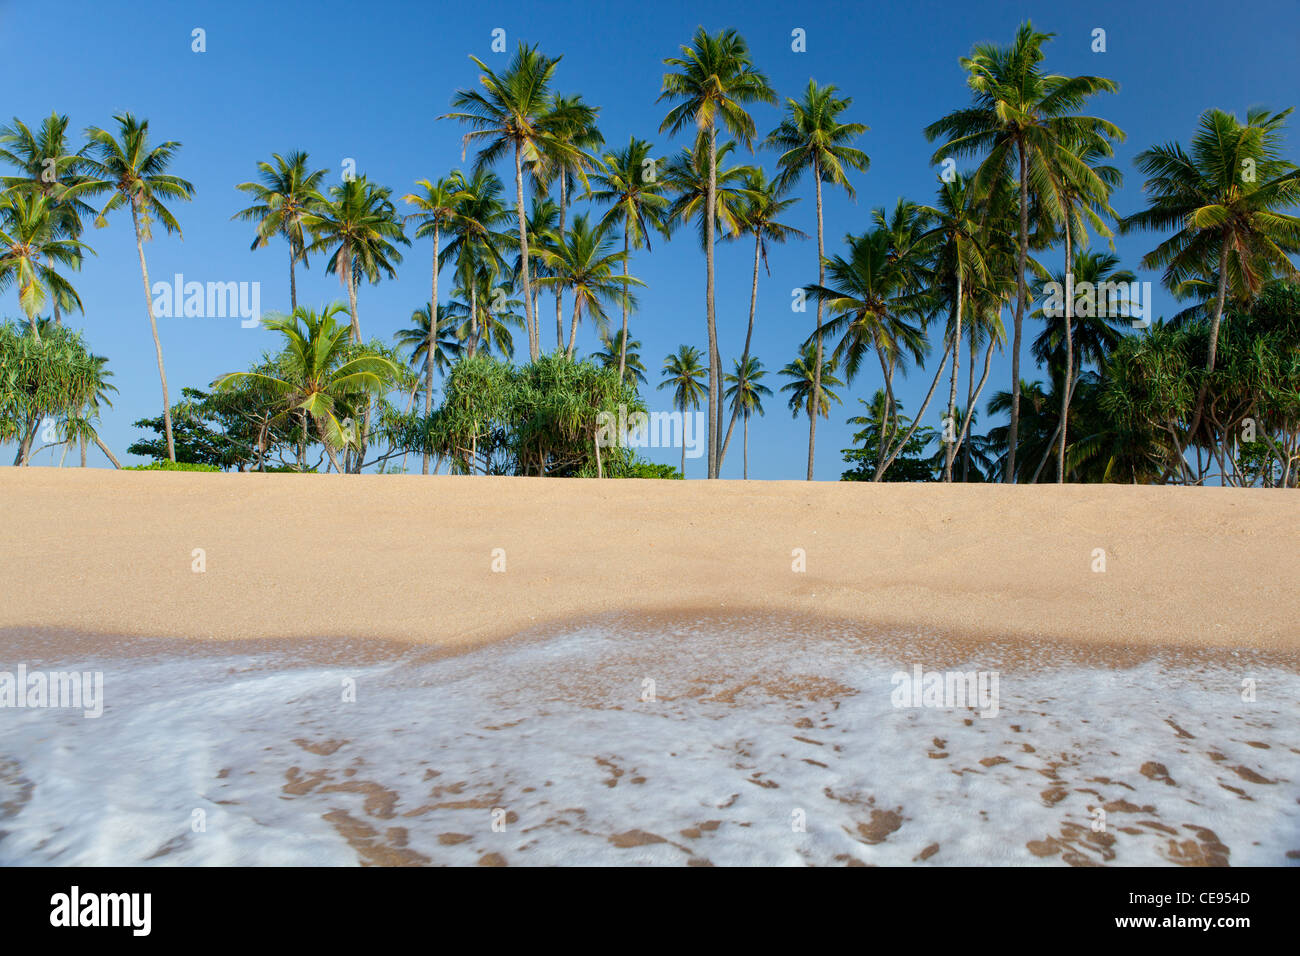 Tropical palm trees sandy beach Tangalla Sri Lanka Asia Stock Photo